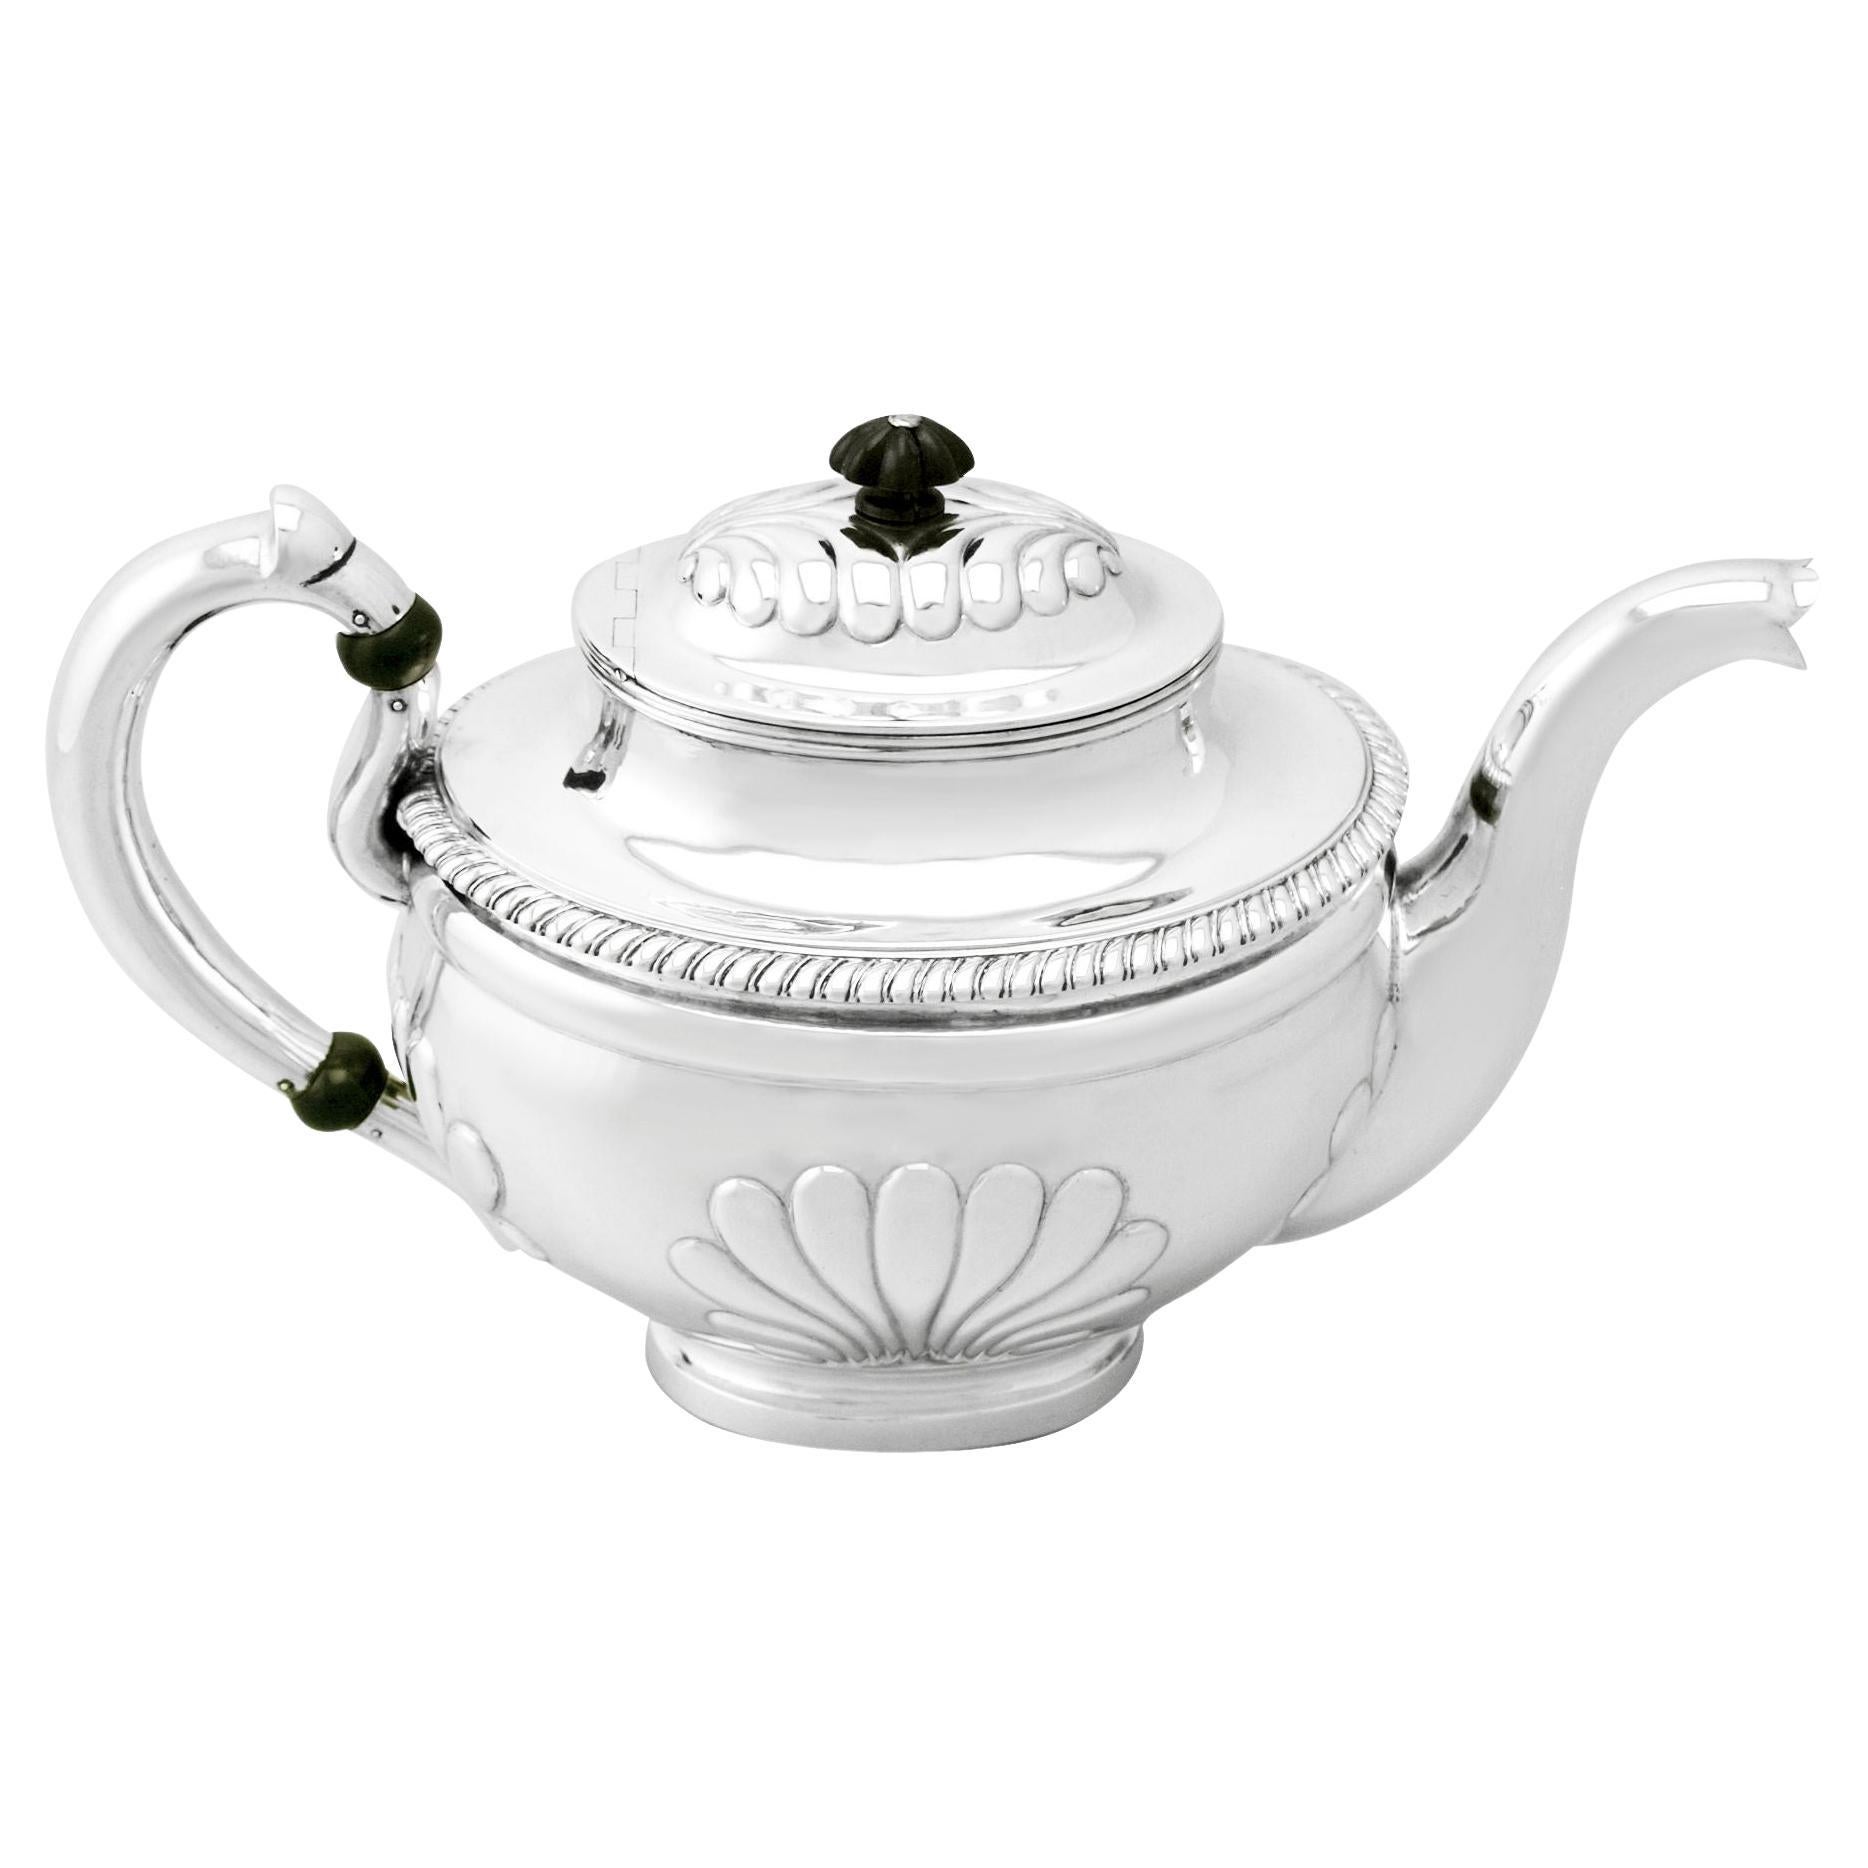 1835 Finnische Silber-Teekanne